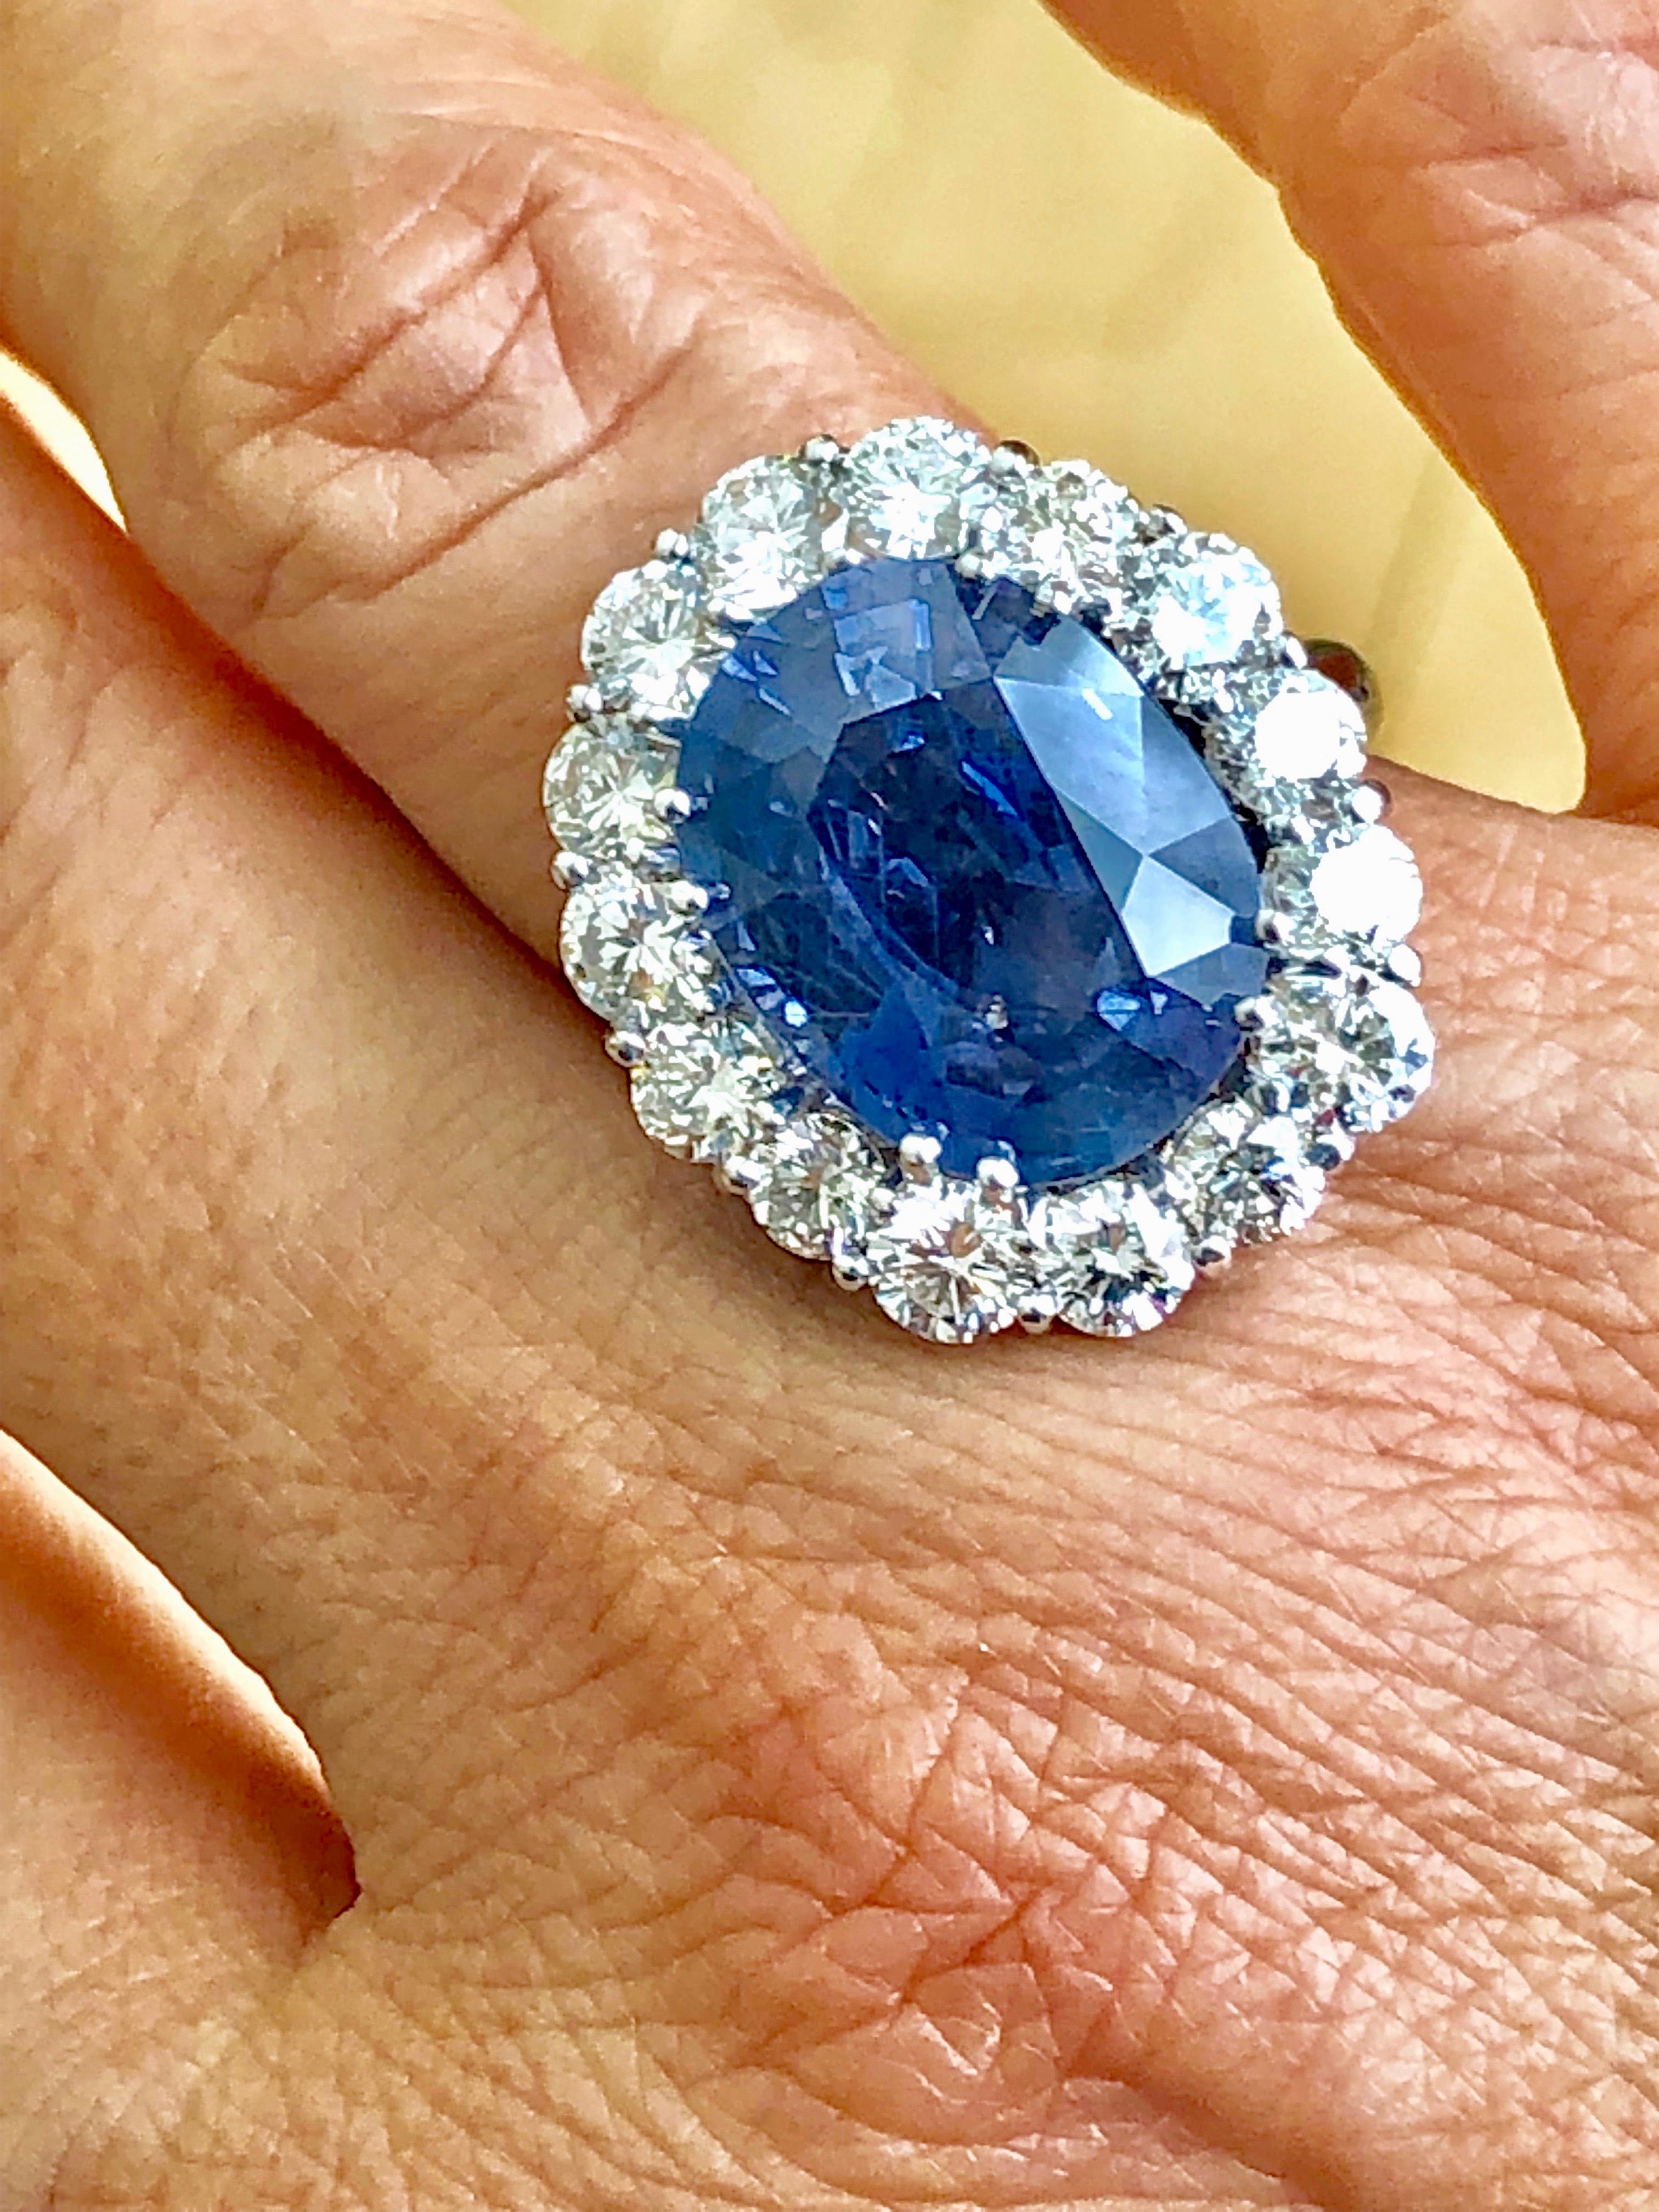 Saphir bleu de Ceylan non chauffé 13,12 carats, pierre précieuse non sertie, coussin certifié en vente 6